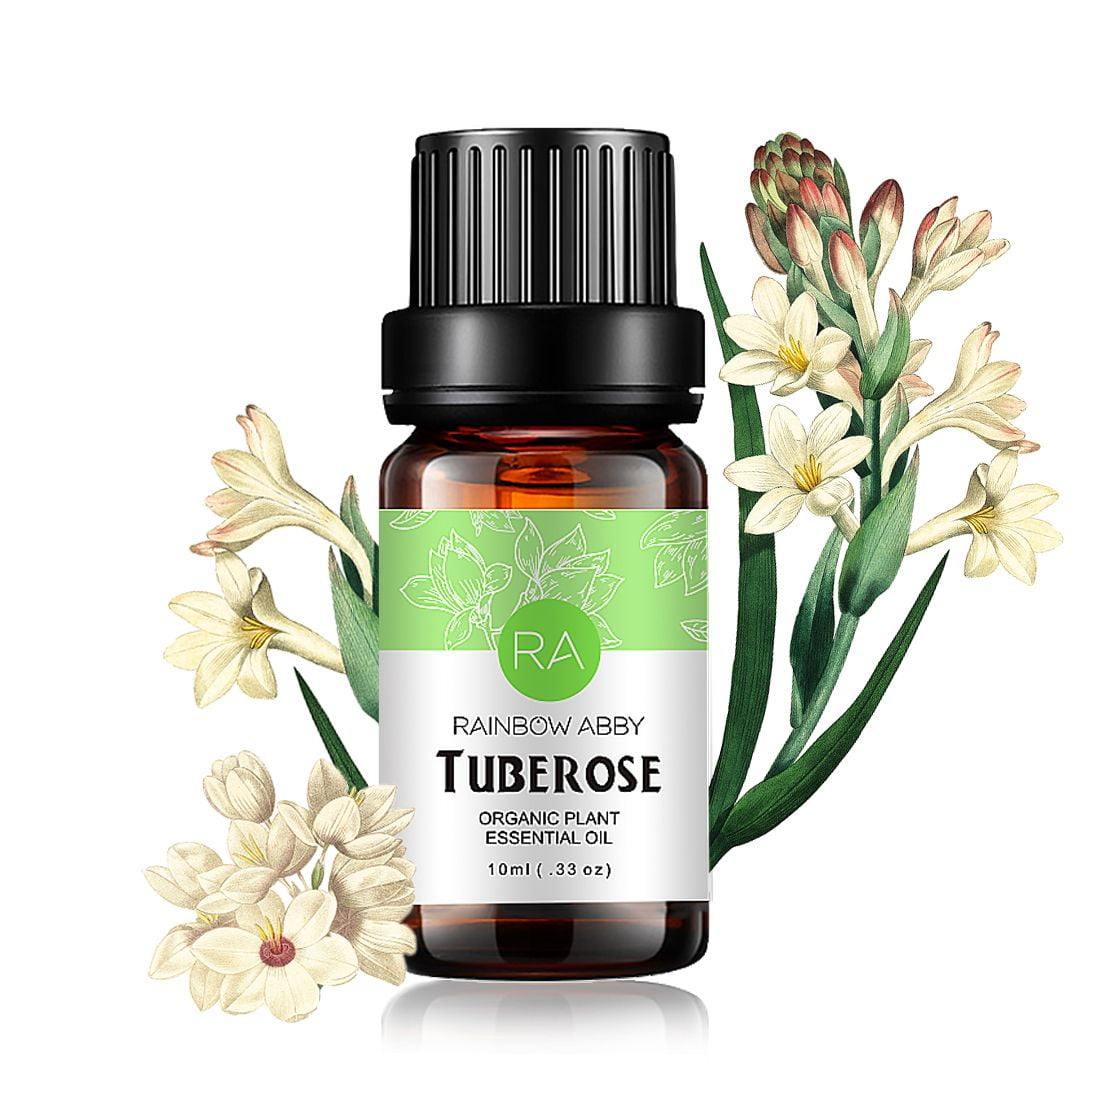 Tuberose (Polianthes tuberosa)100% Pure & Natural Essential Oil - [10ml -  25 L]